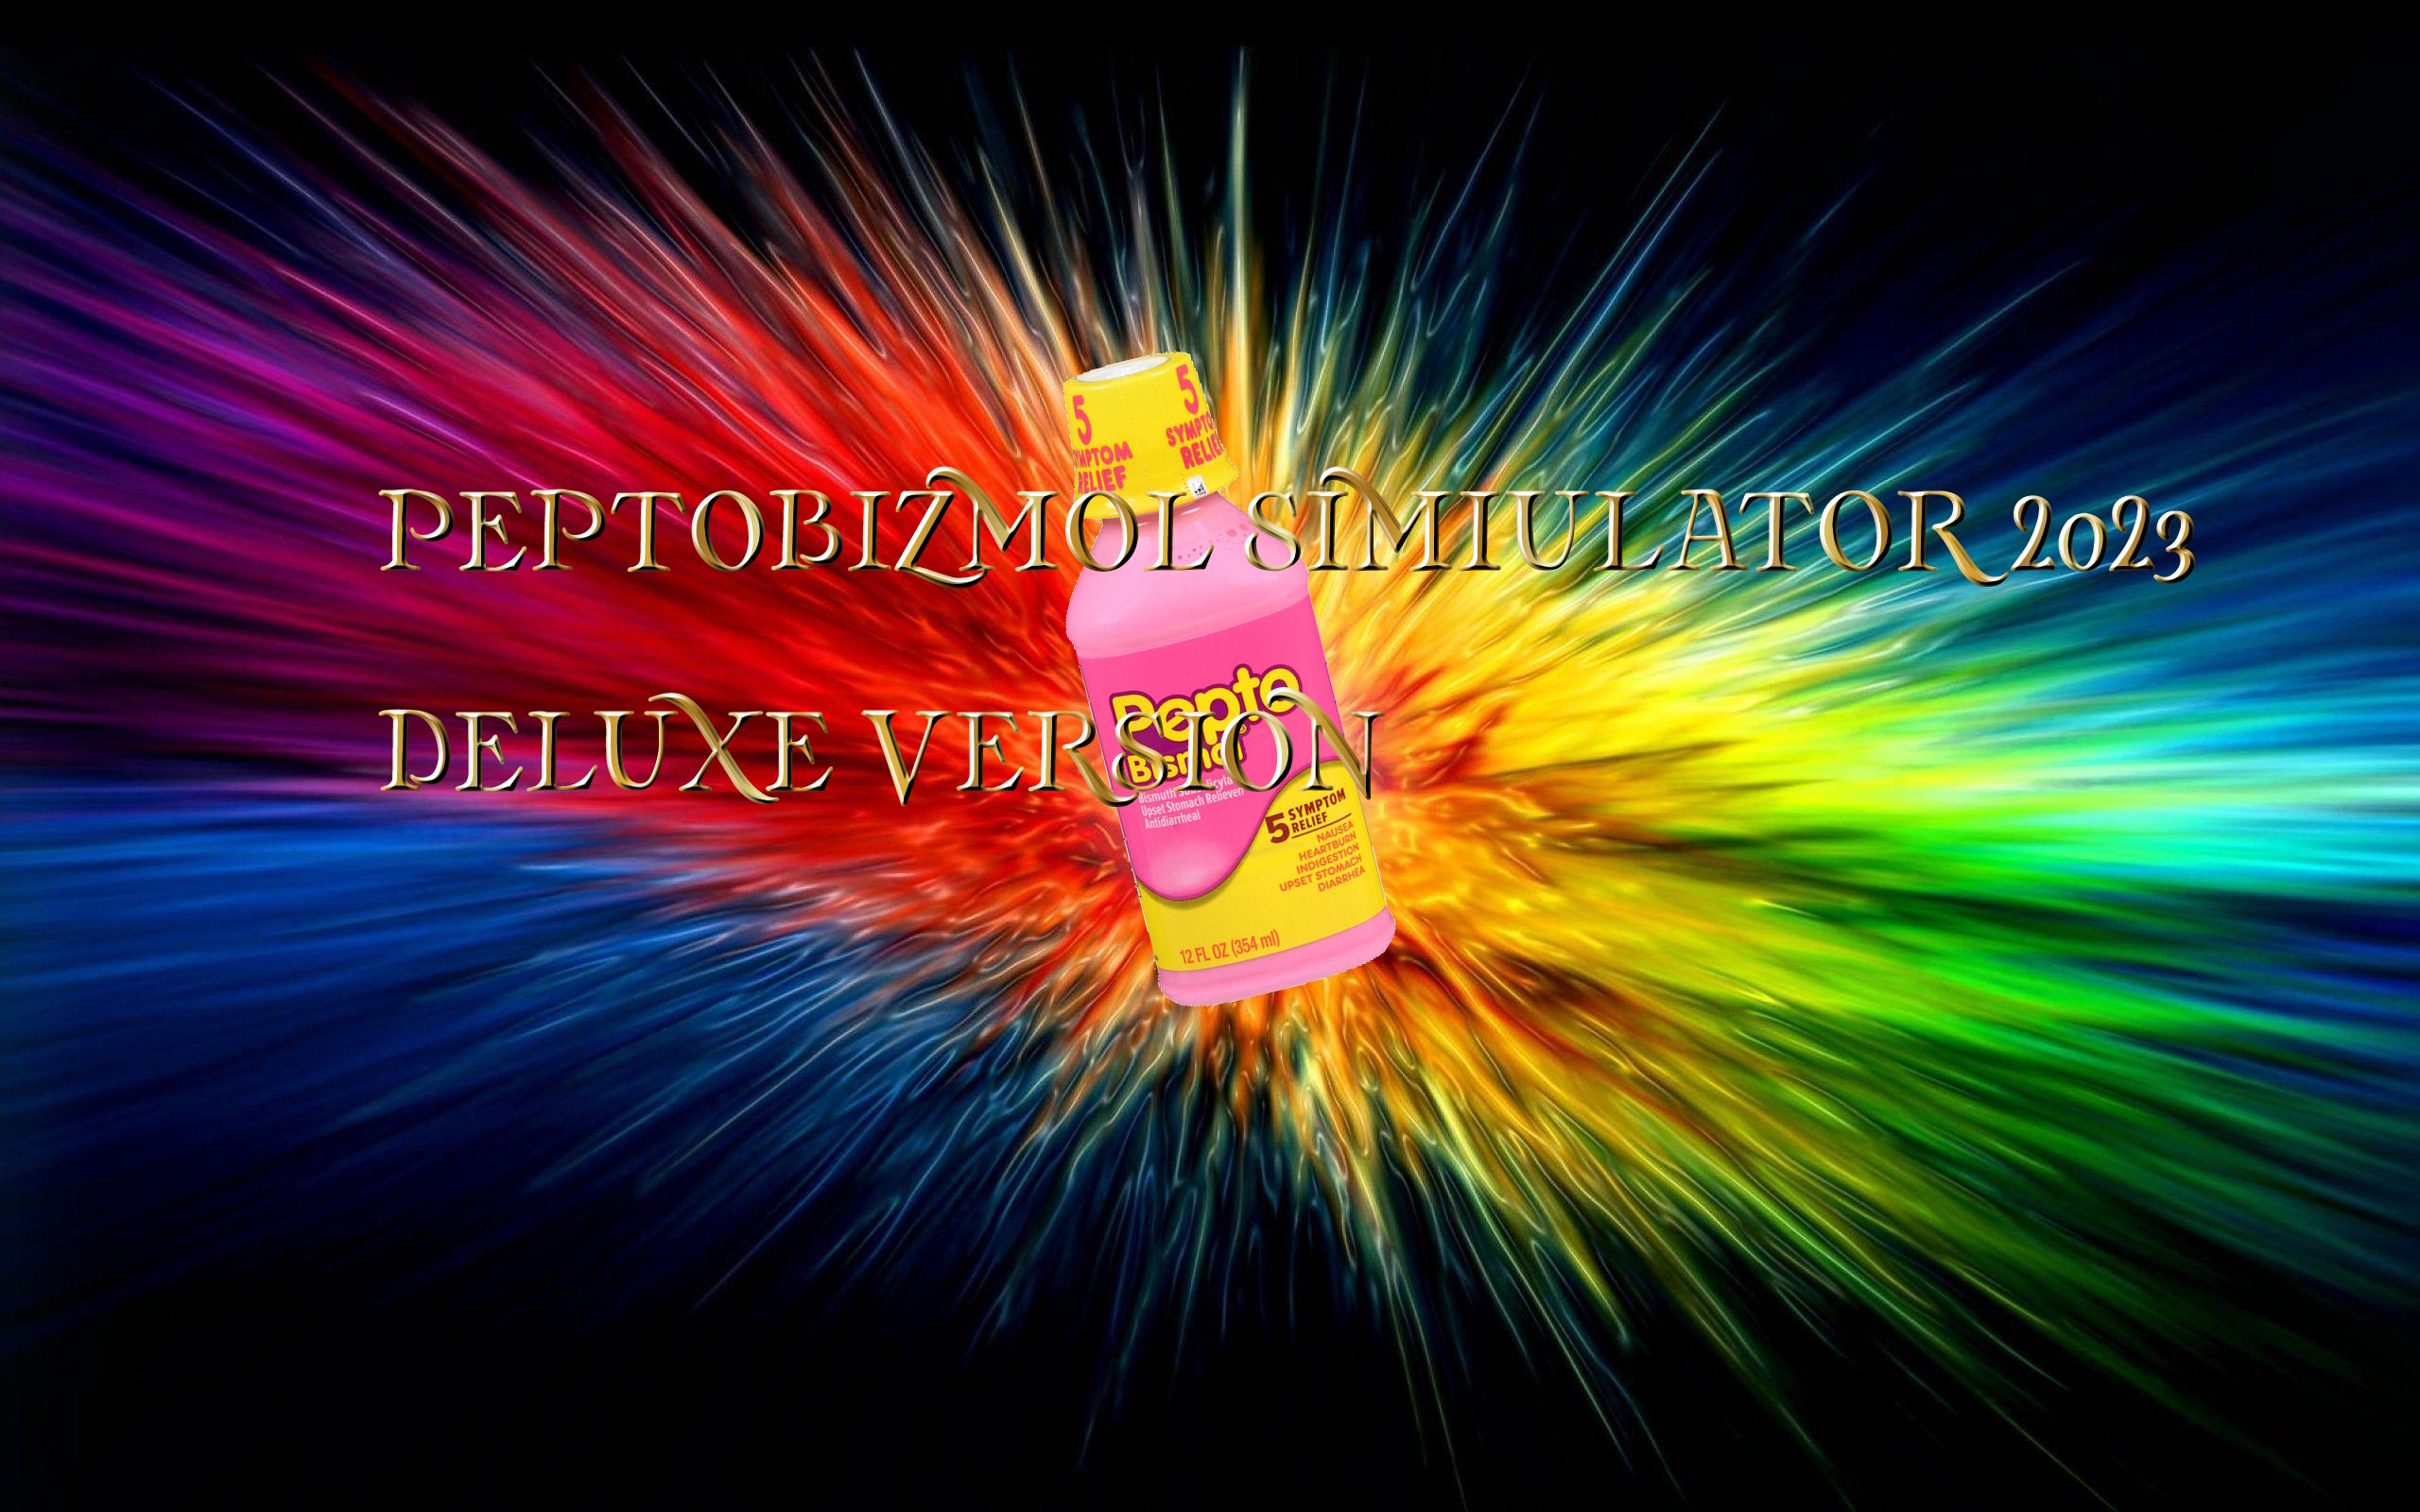 Peptobizmol simulator 2023: deluxe edition